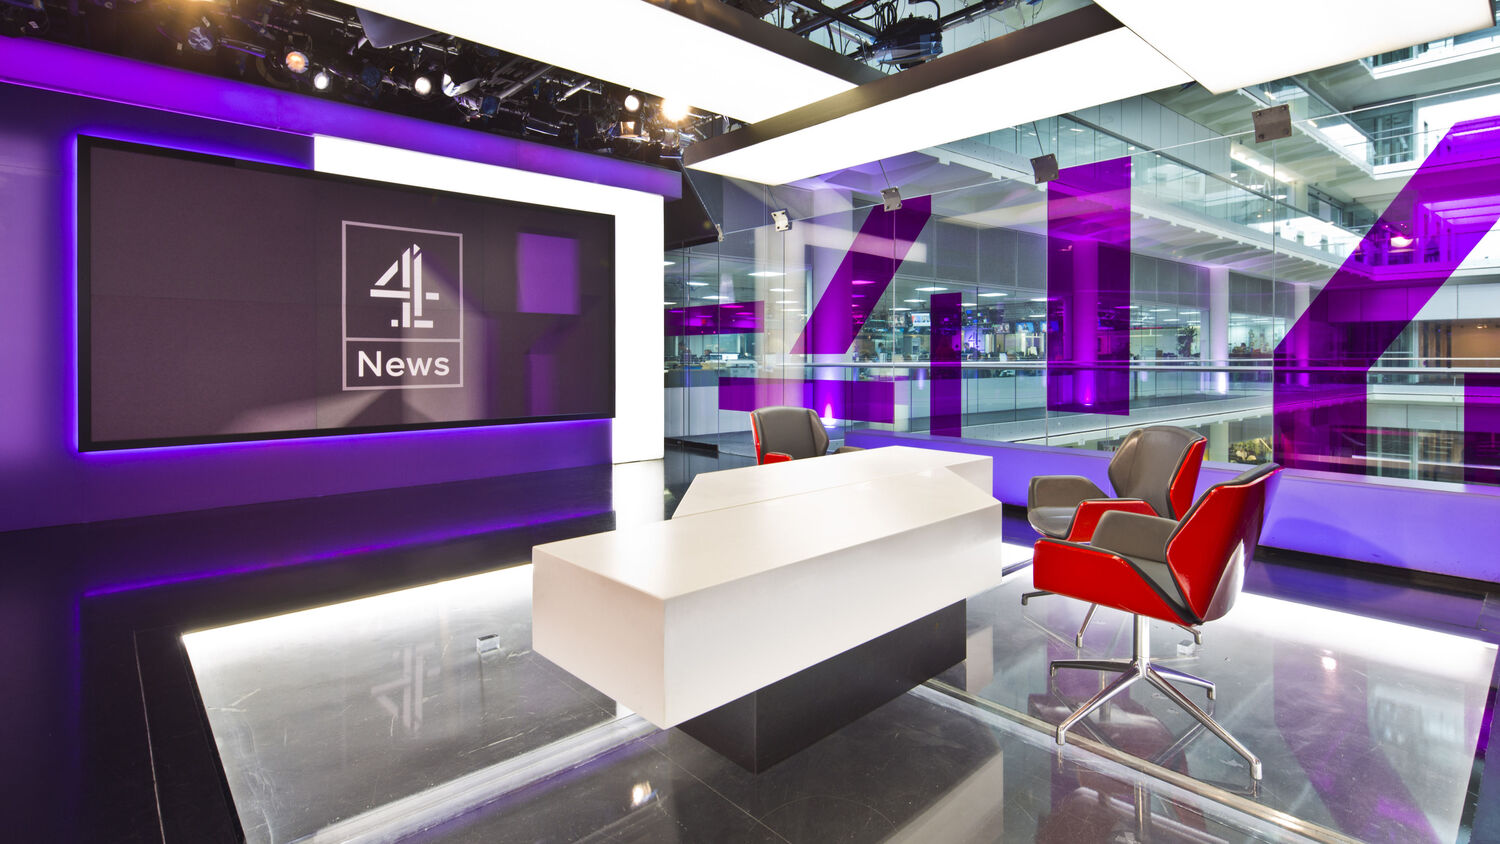 Channel 4 News| Jago Design